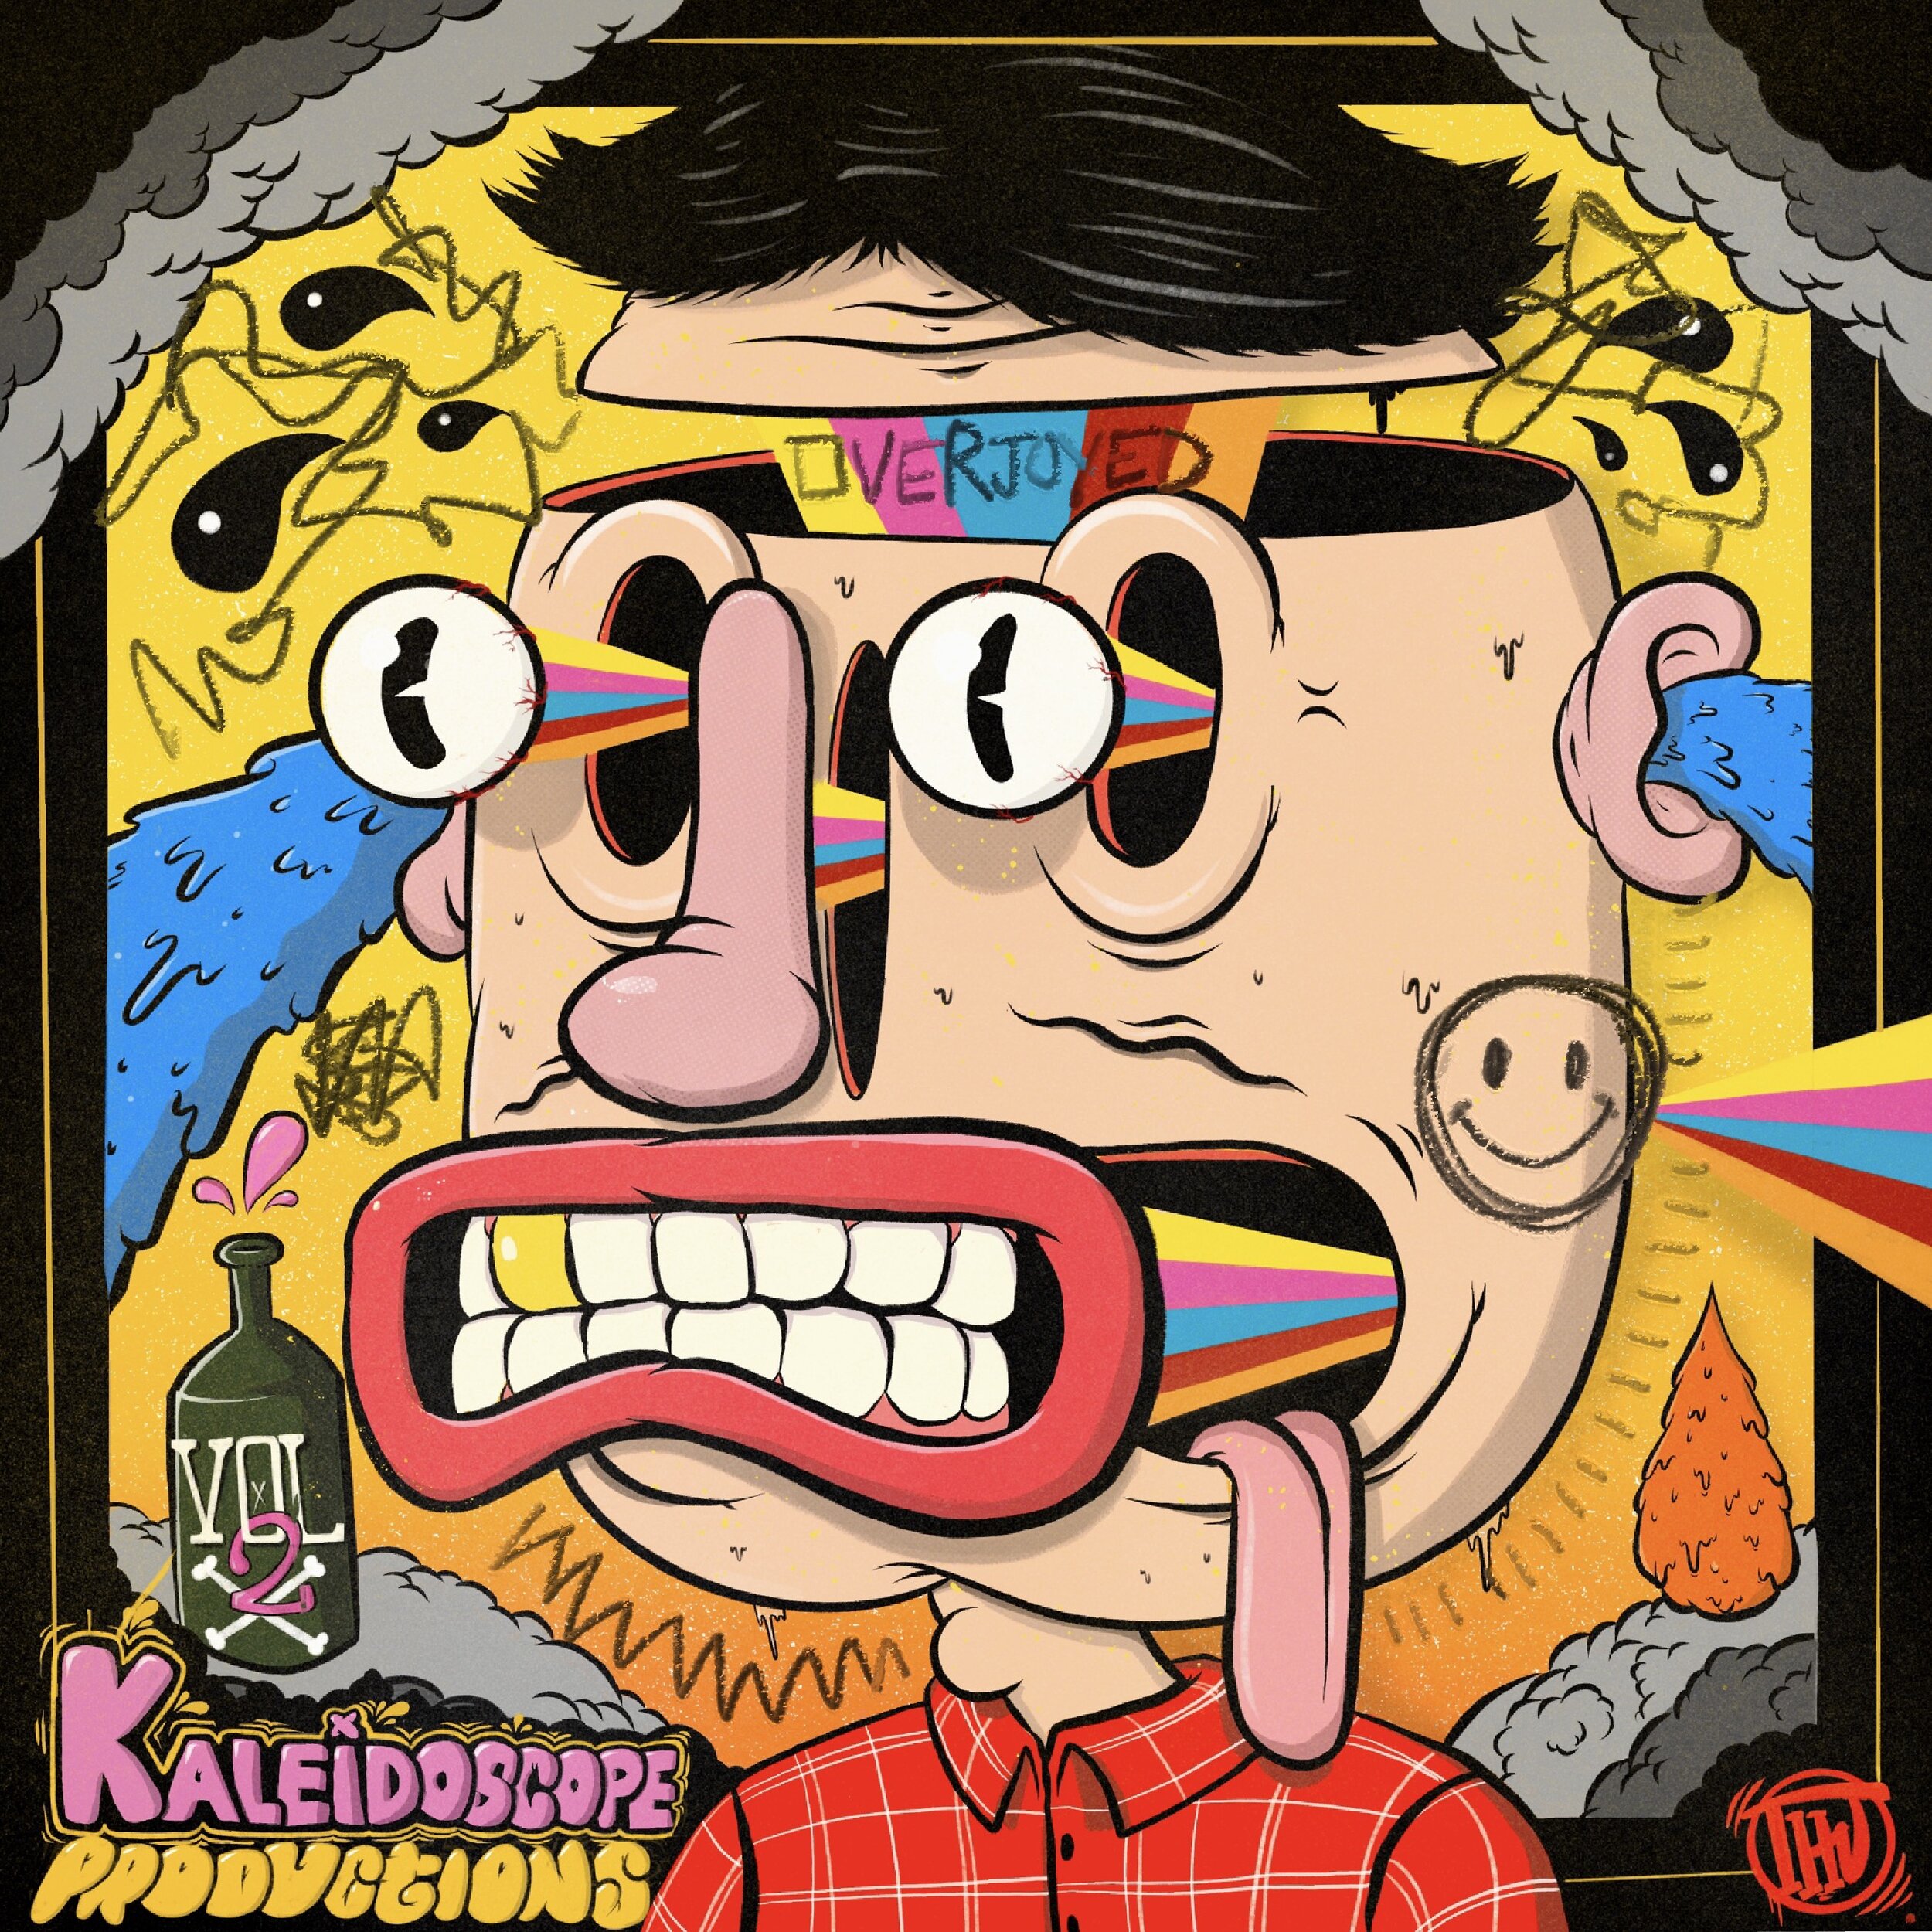 Kaleidoscope Productions Vol. 2 Album cover 